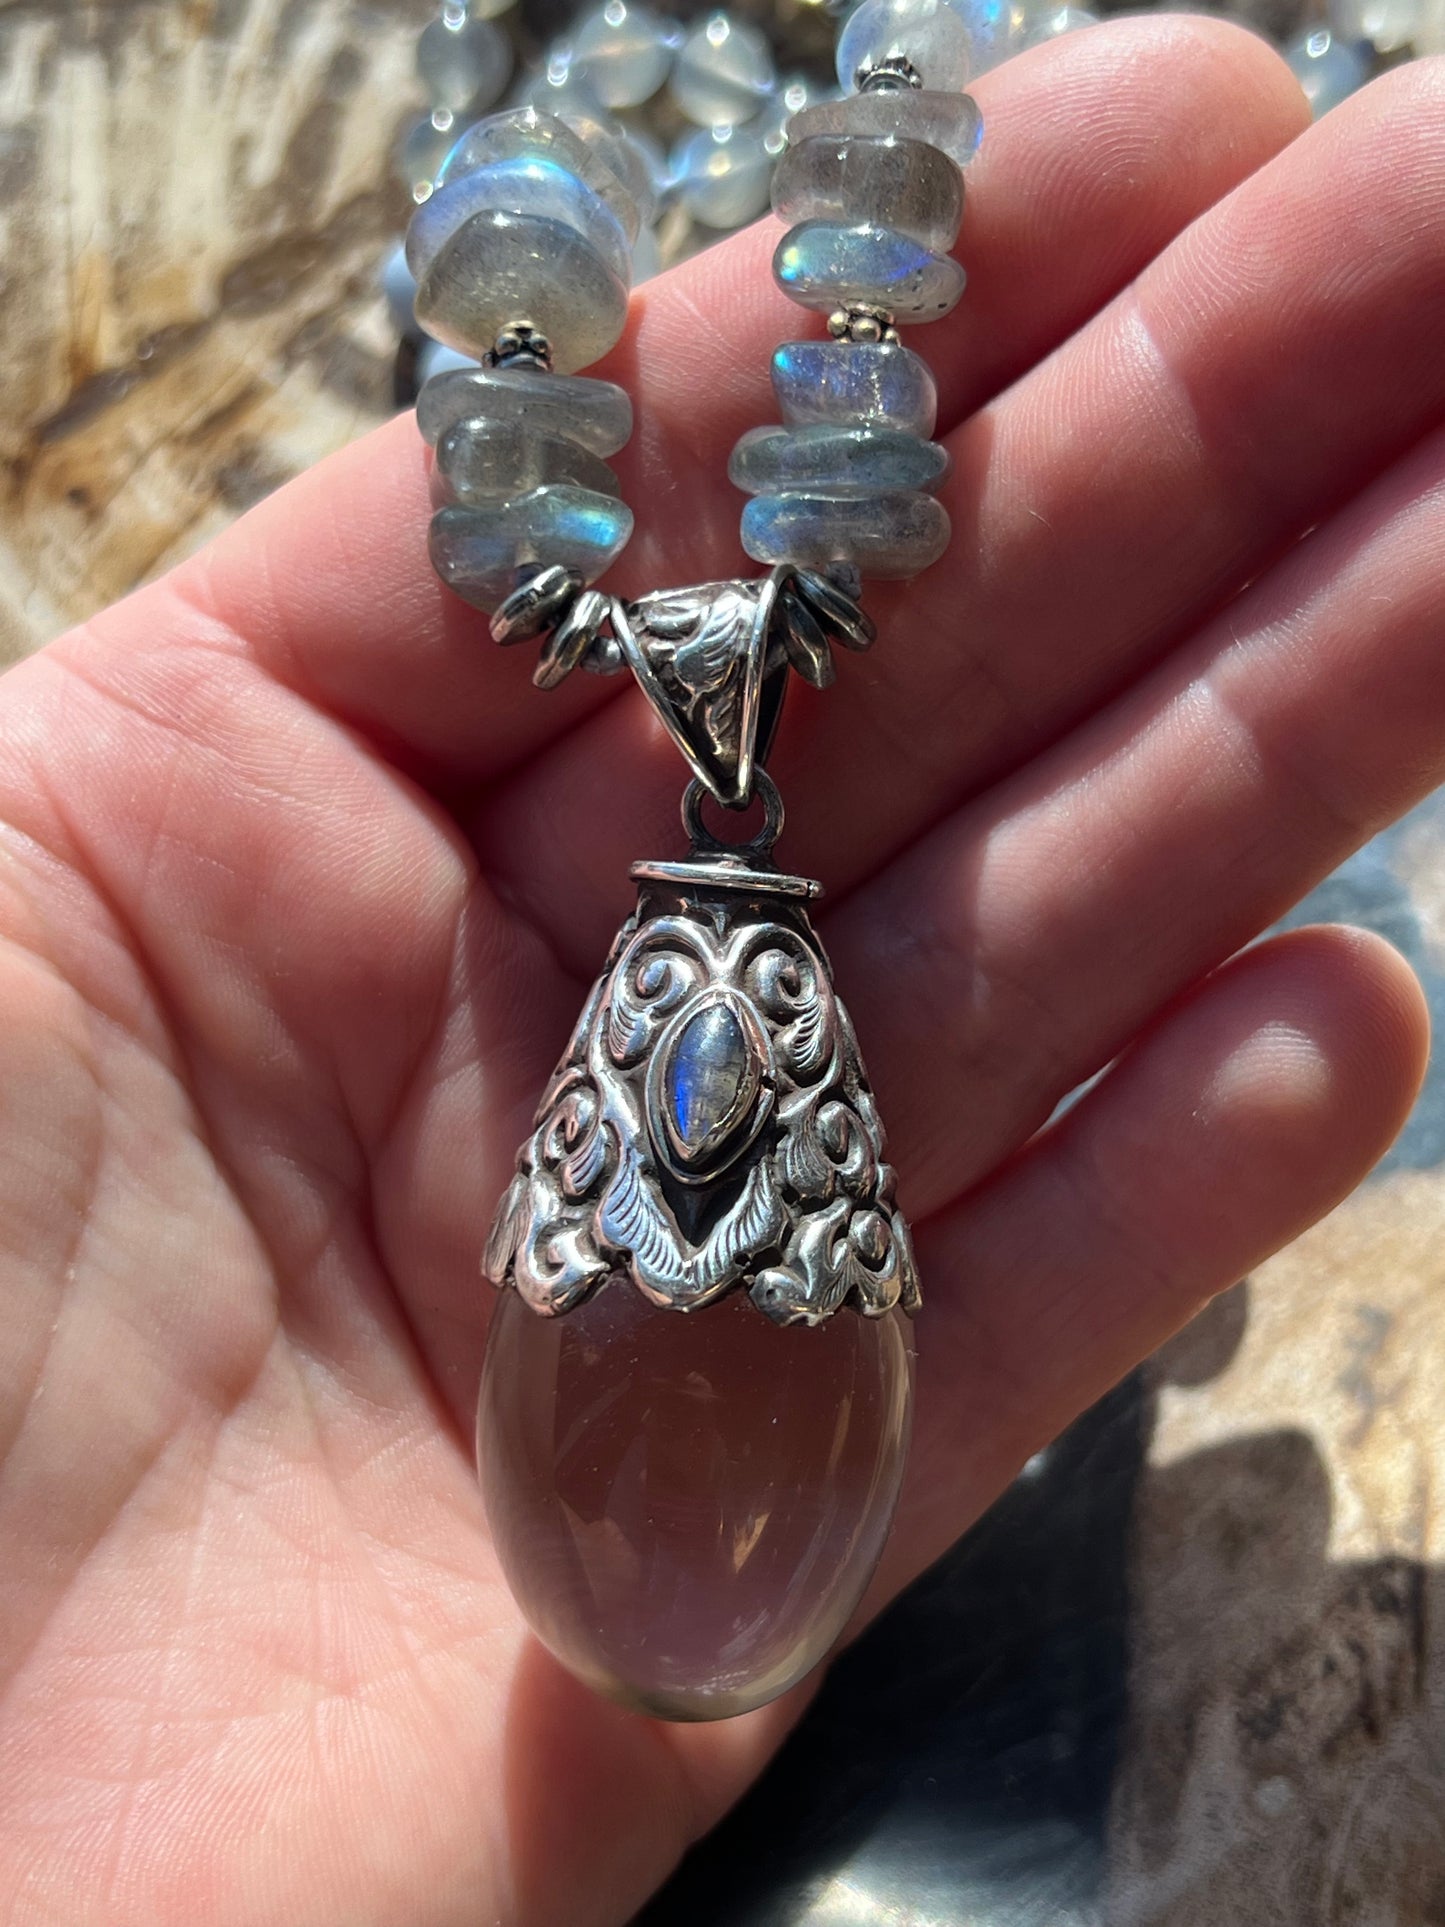 Mālā Half with Labradorite and Angelite Beads and a Himalayan Quartz Bead/Pendant